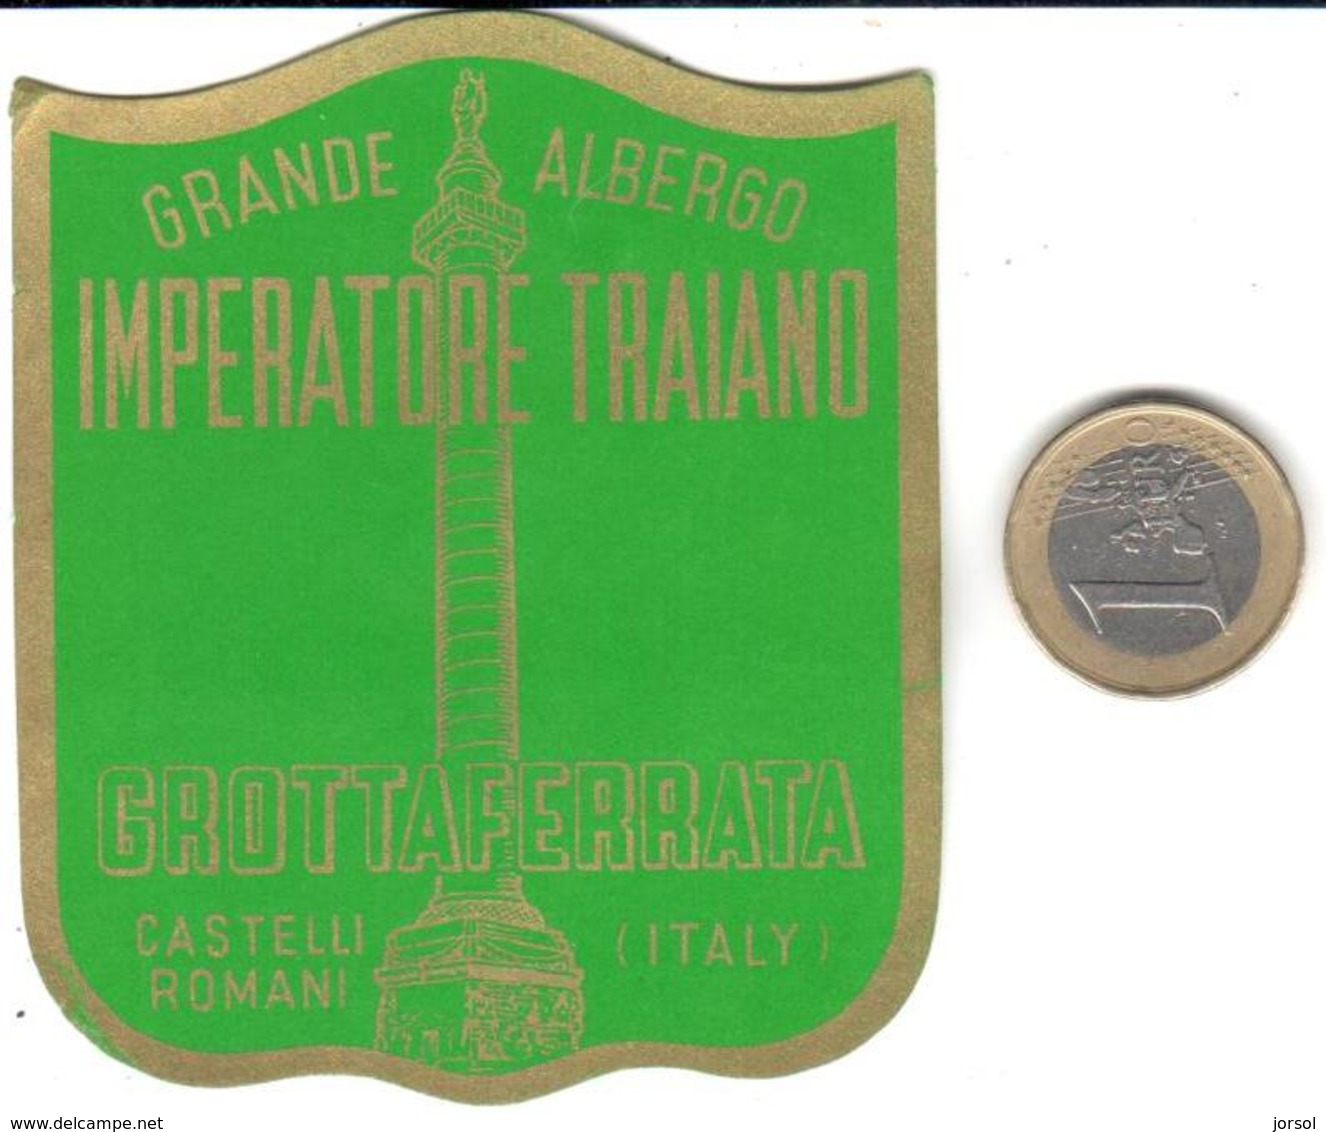 ETIQUETA DE HOTEL  - GRAND ALBERGO IMPERATORI TRAIANO  -CASTELLI ROMANI  - ITALIA - Hotel Labels